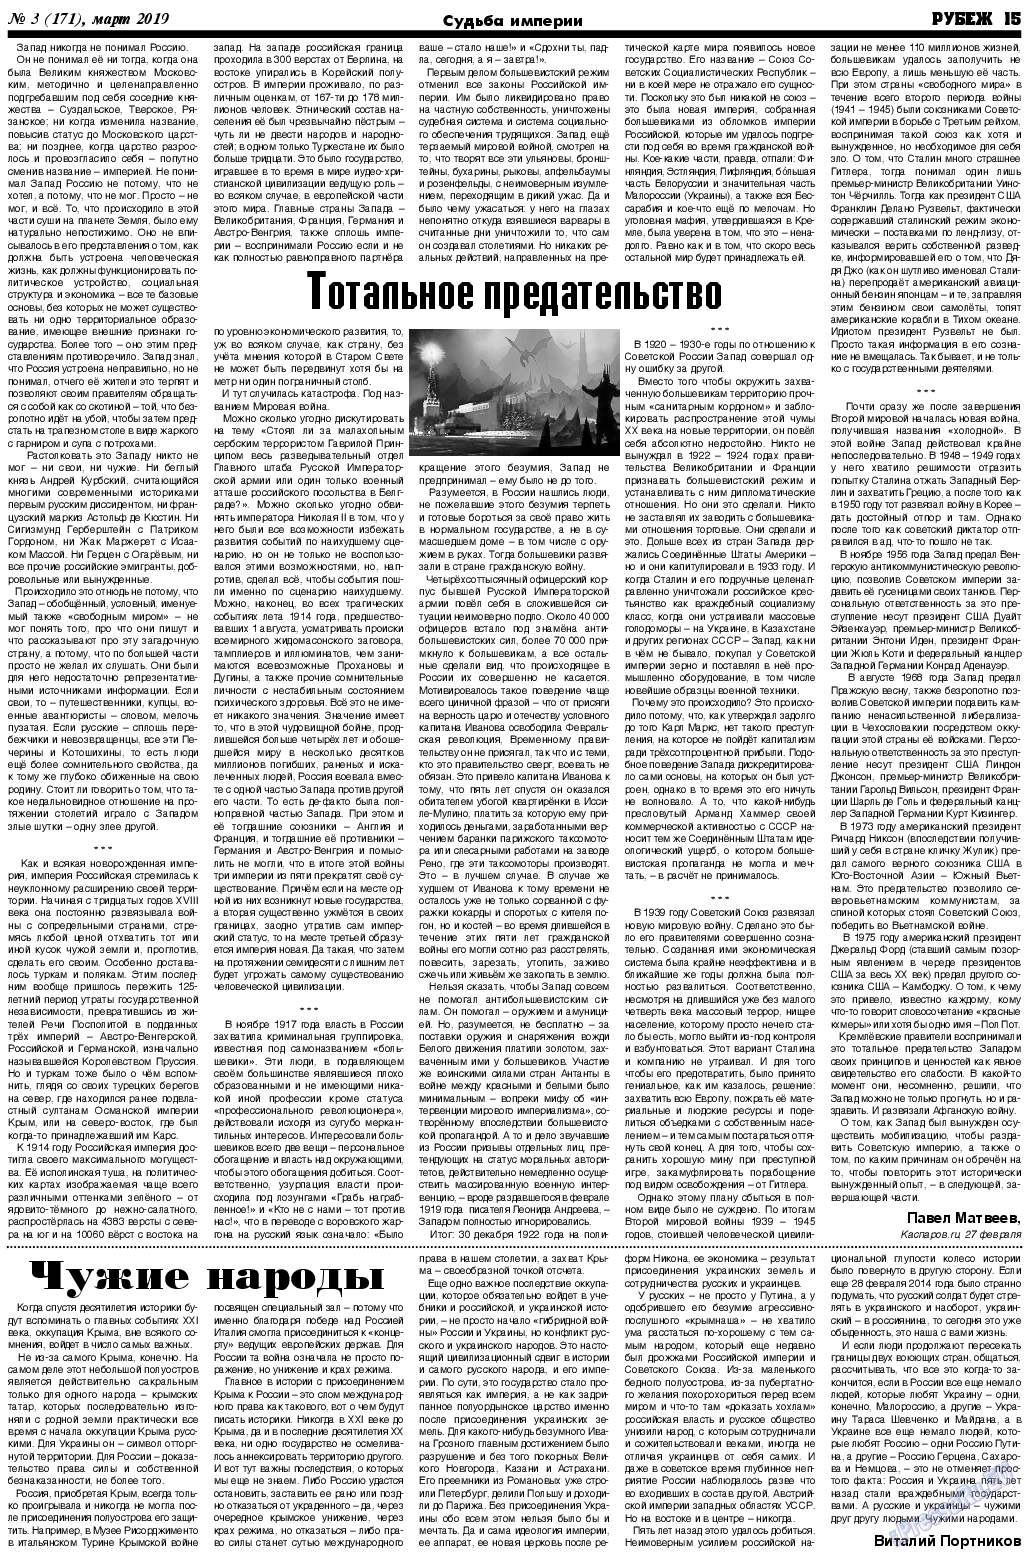 Рубеж, газета. 2019 №3 стр.15